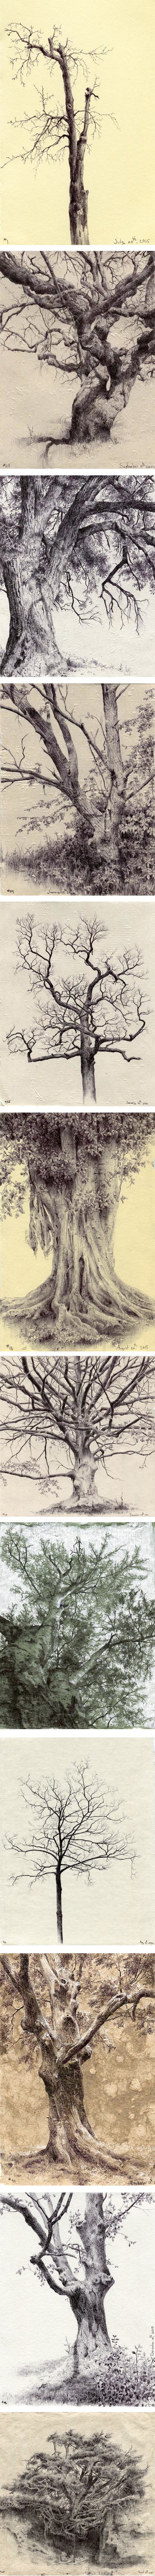 Secret Life of Trees, Dina Brodsky